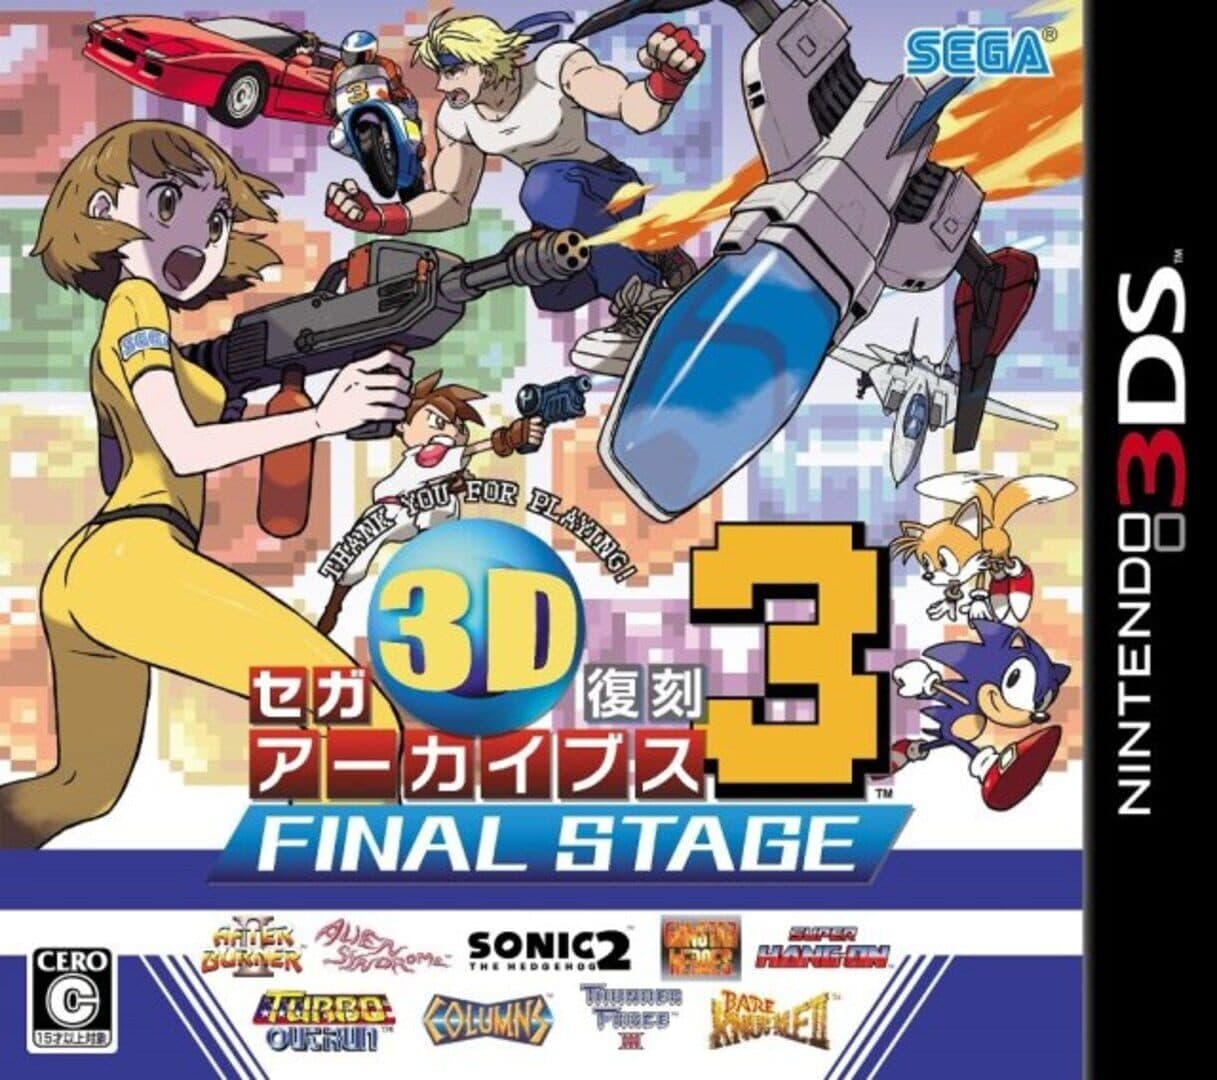 Sega 3D Fukkoku Archives 3: Final Stage cover art